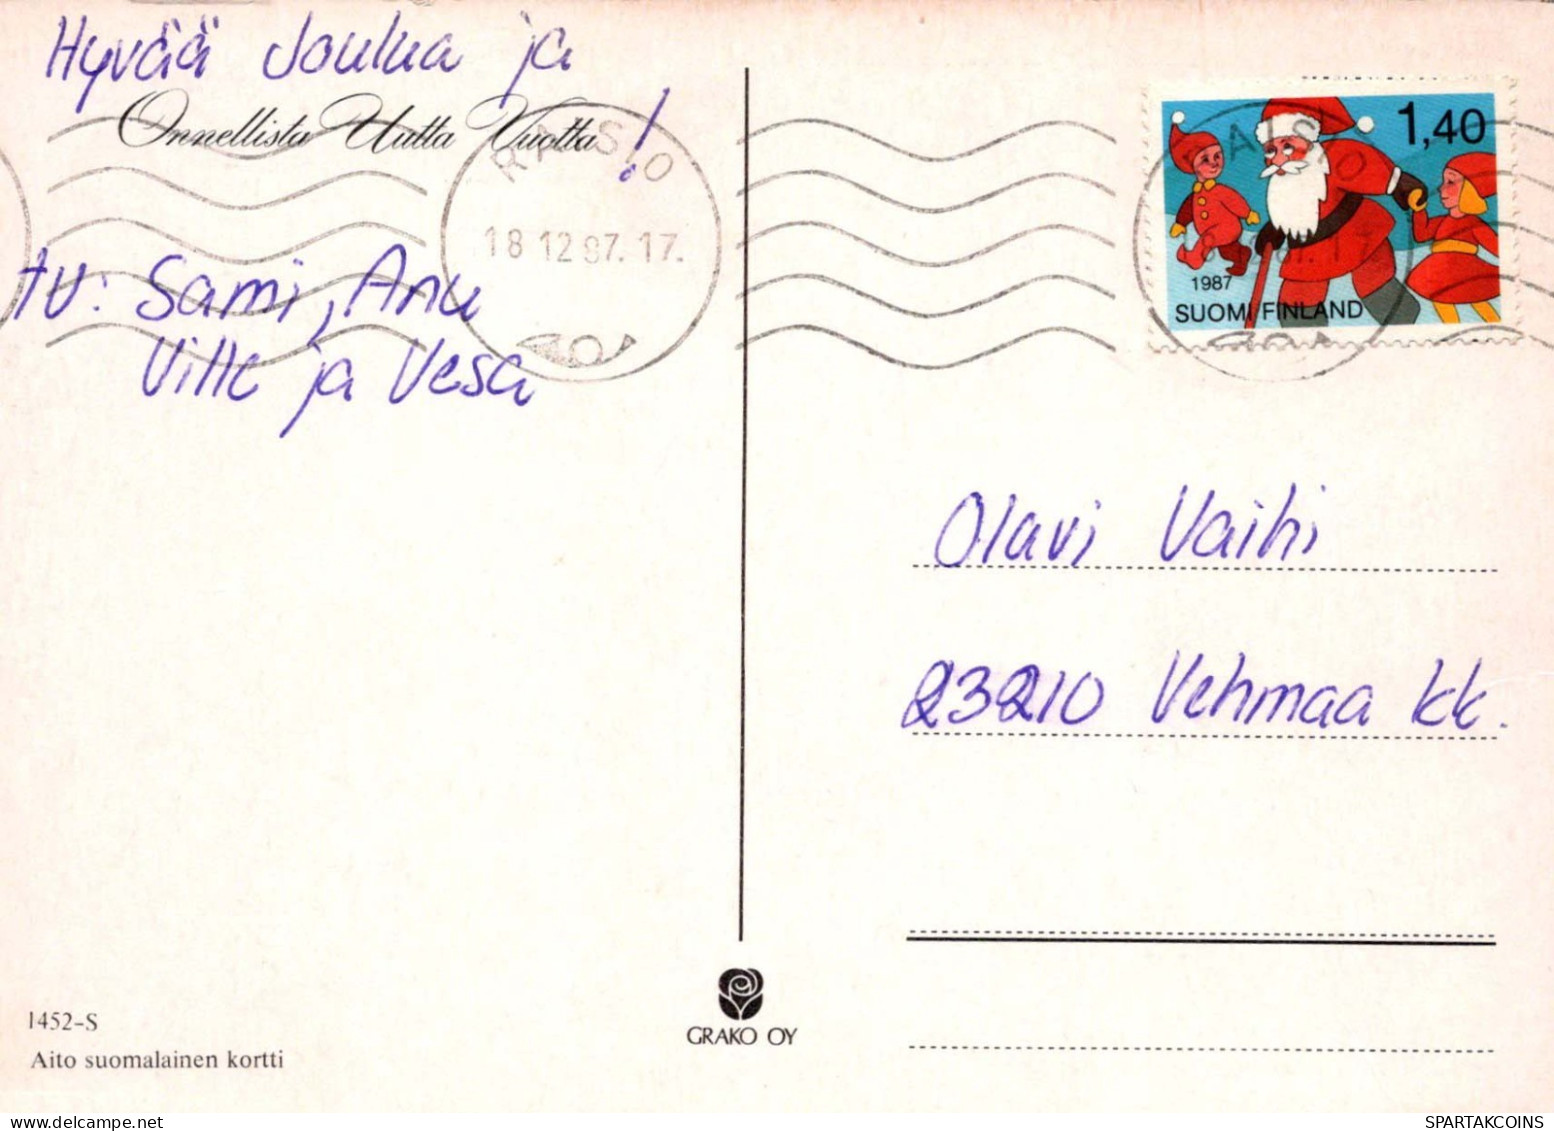 Buon Anno Natale BAMBINO CAVALLOSHOE Vintage Cartolina CPSM #PAU066.IT - Nouvel An